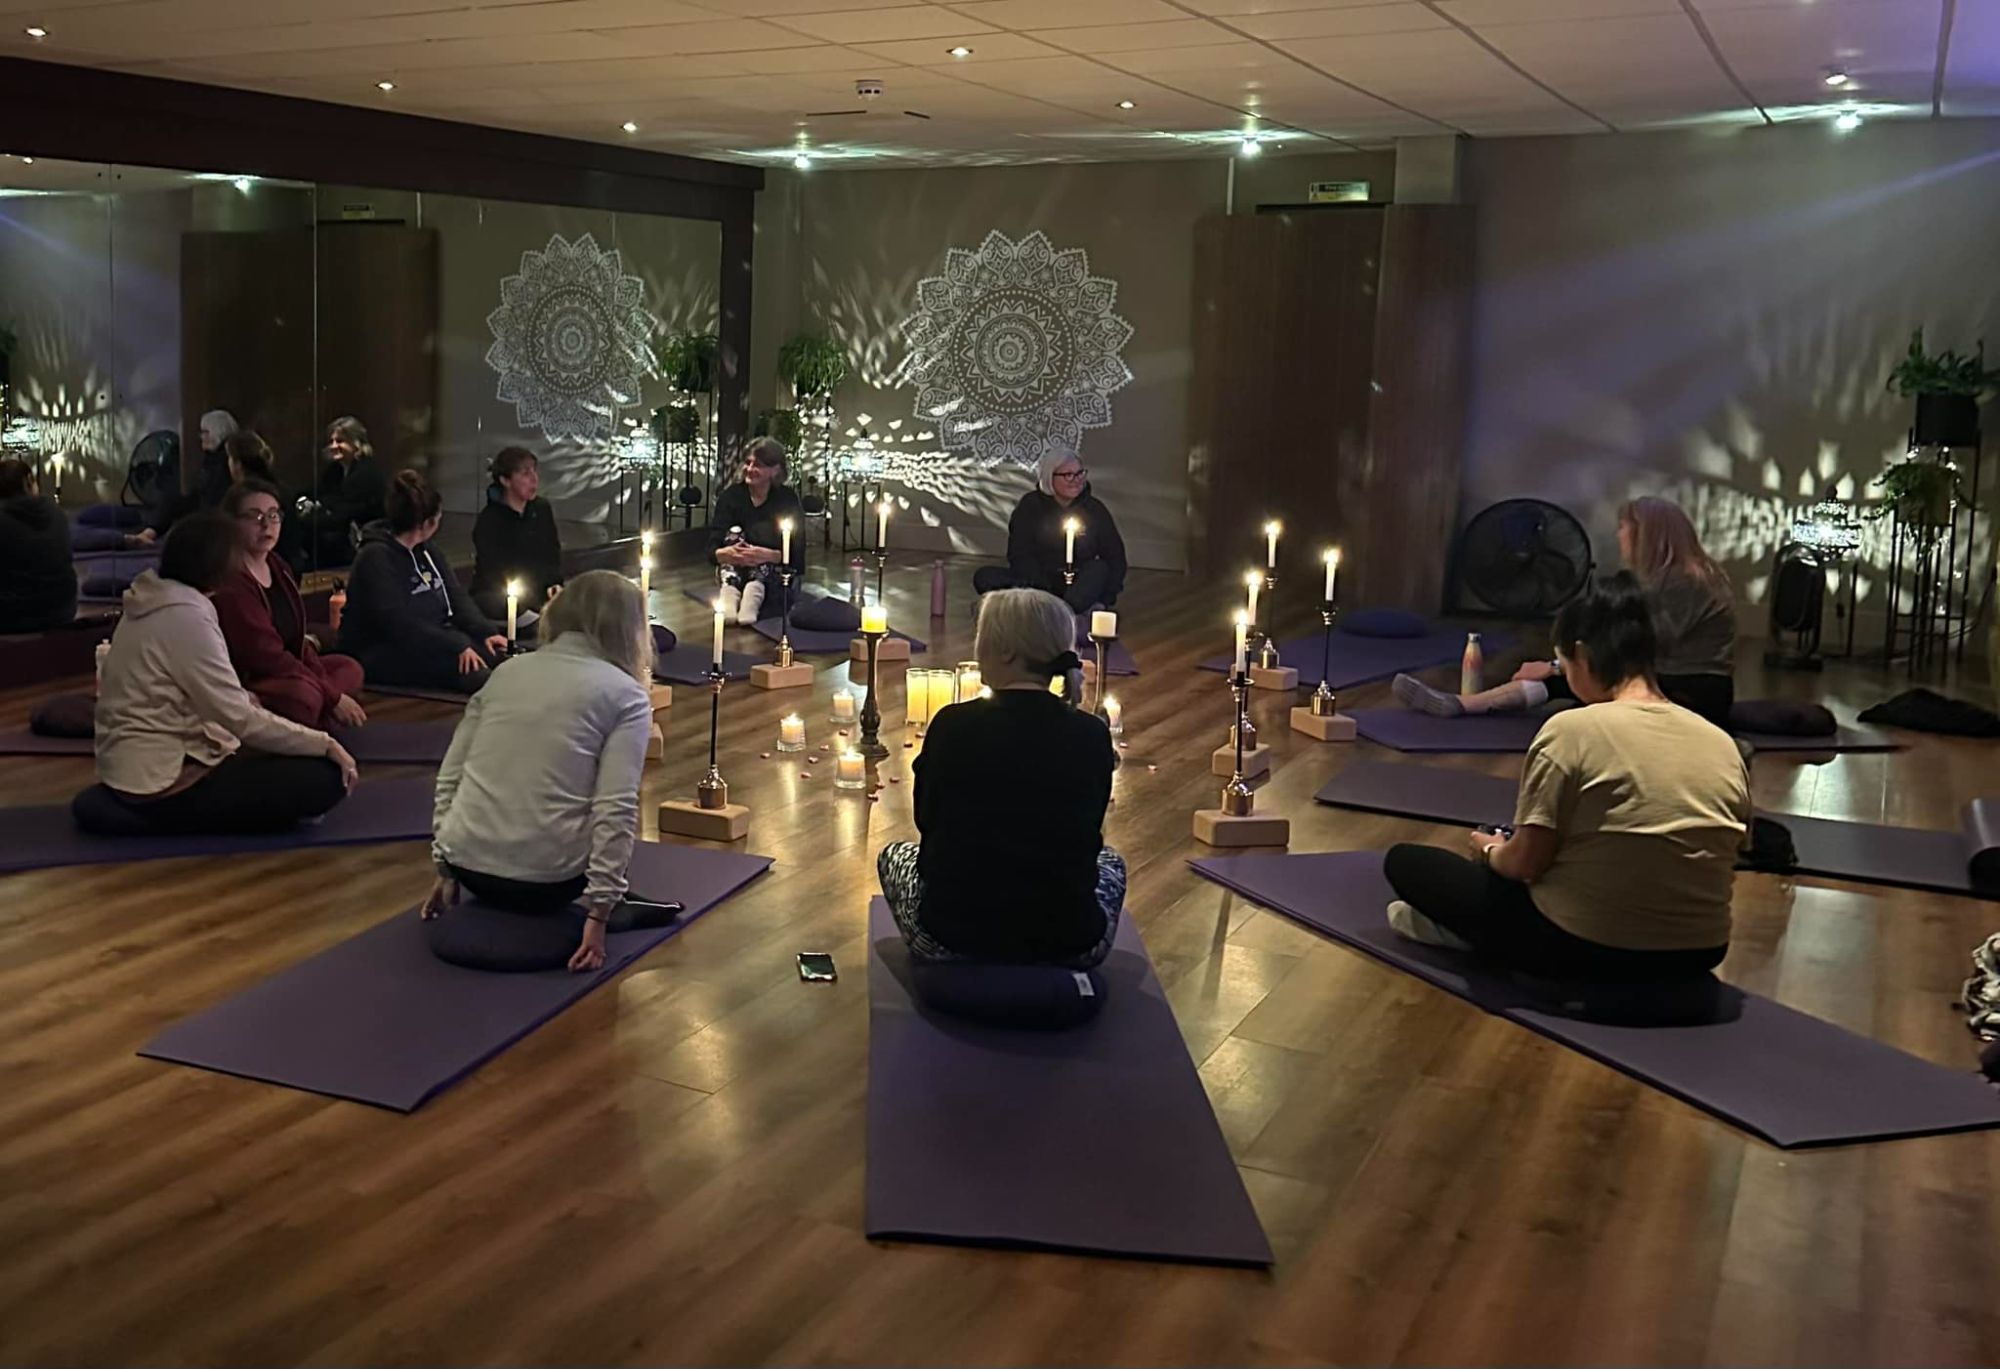 Yoga Workshops Power of Yoga Studio, Greenhill Sheffield